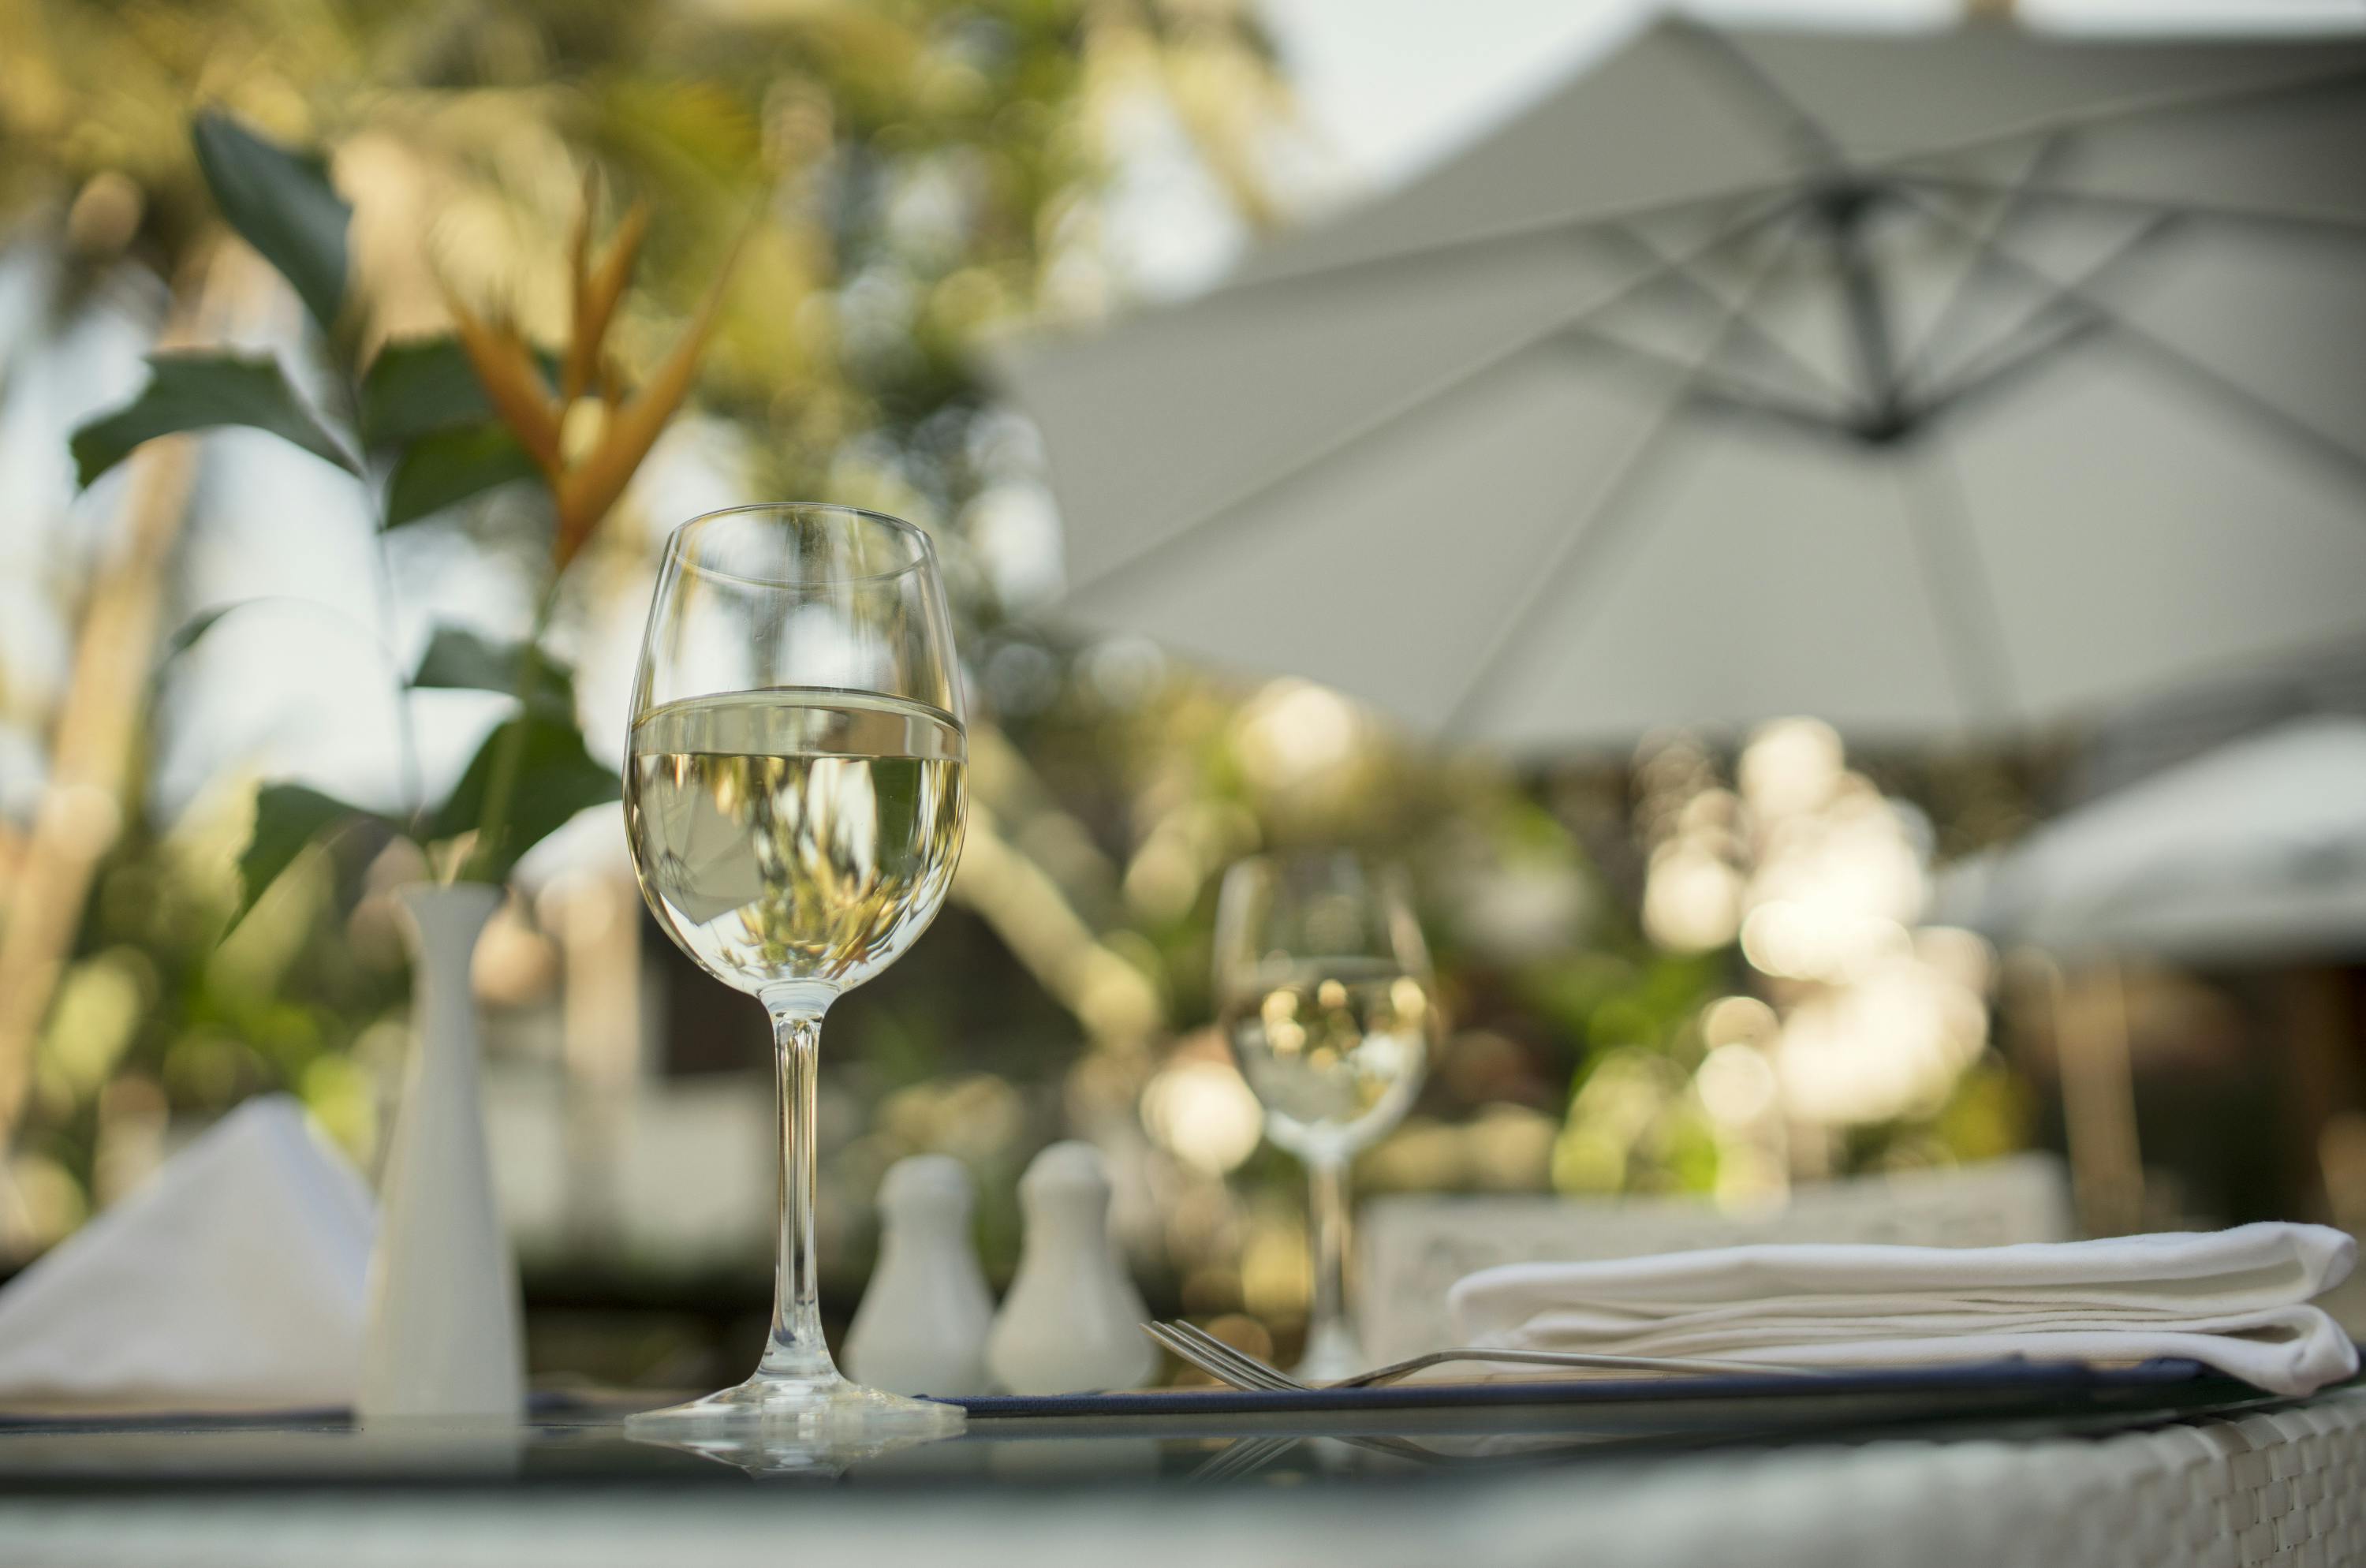 Parasol Blanc Hotel restaurant setting